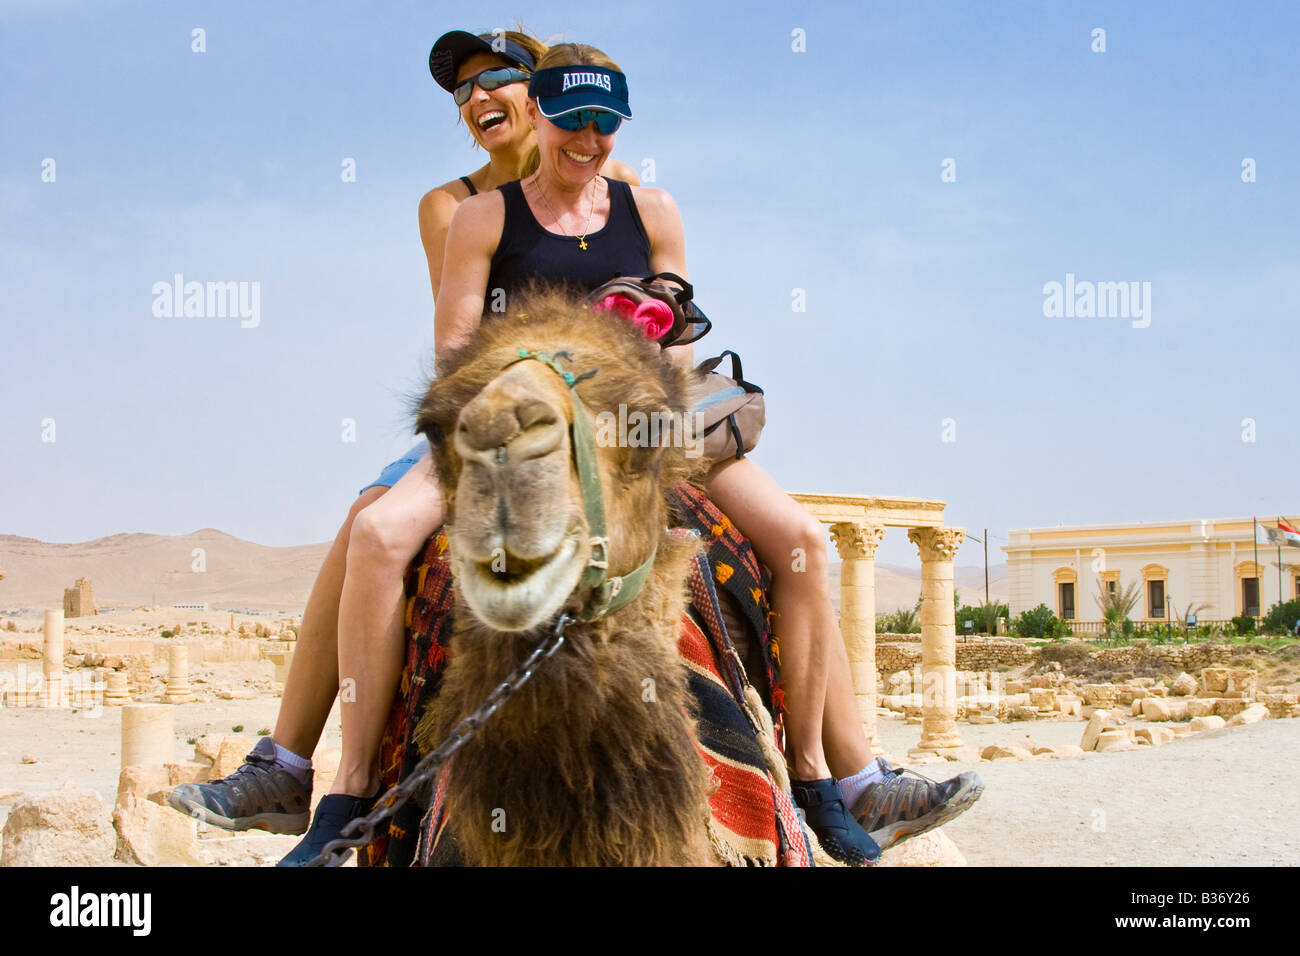 Turismo camello montando fotografías e imágenes de alta resolución - Página  4 - Alamy